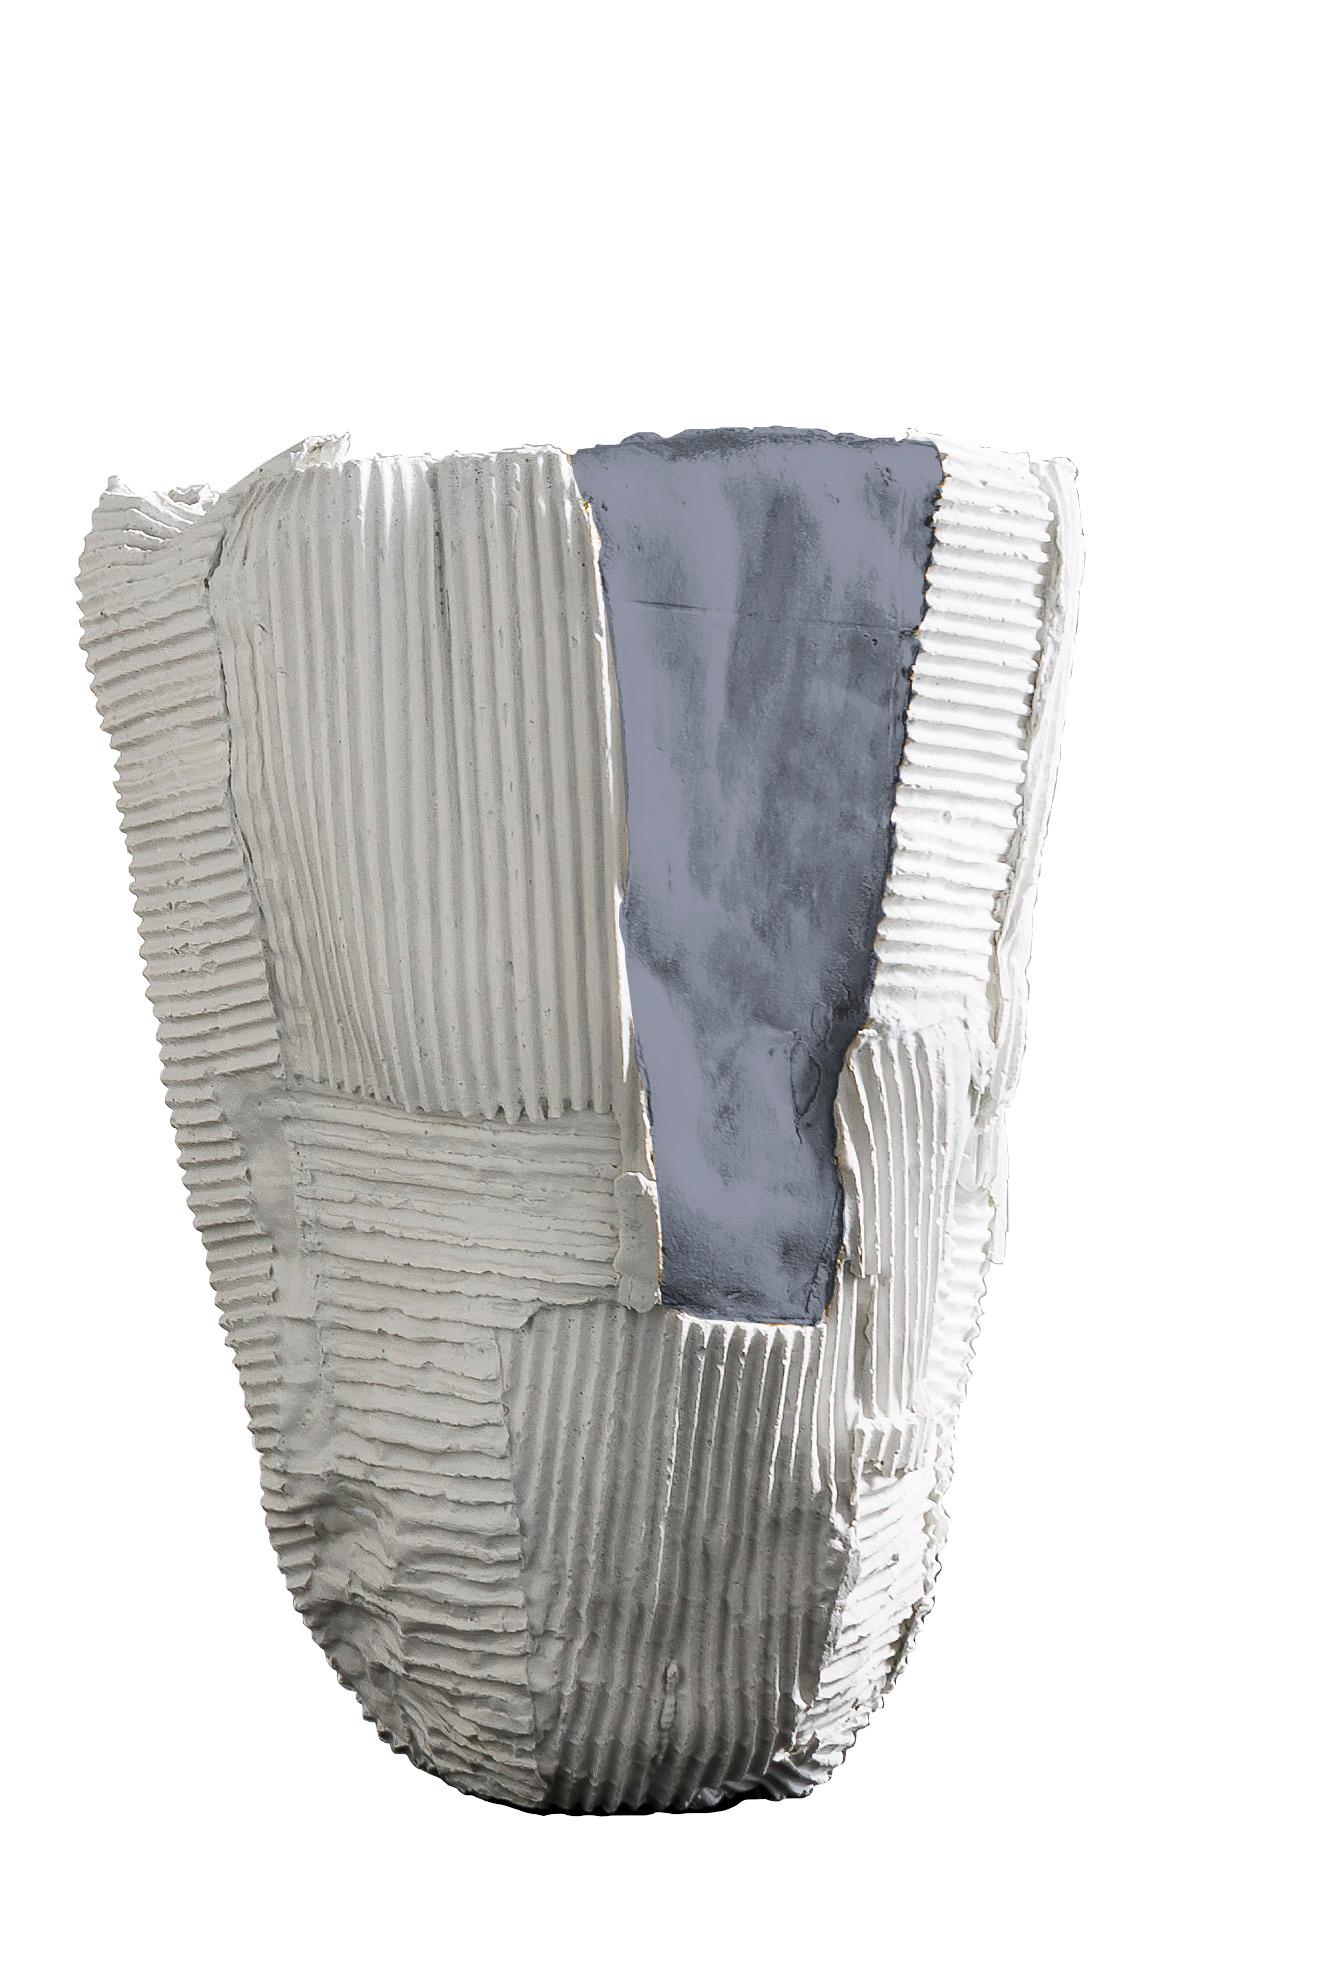 Italian Contemporary Ceramic Cartocci Texture White and Gray Tall Vase For Sale